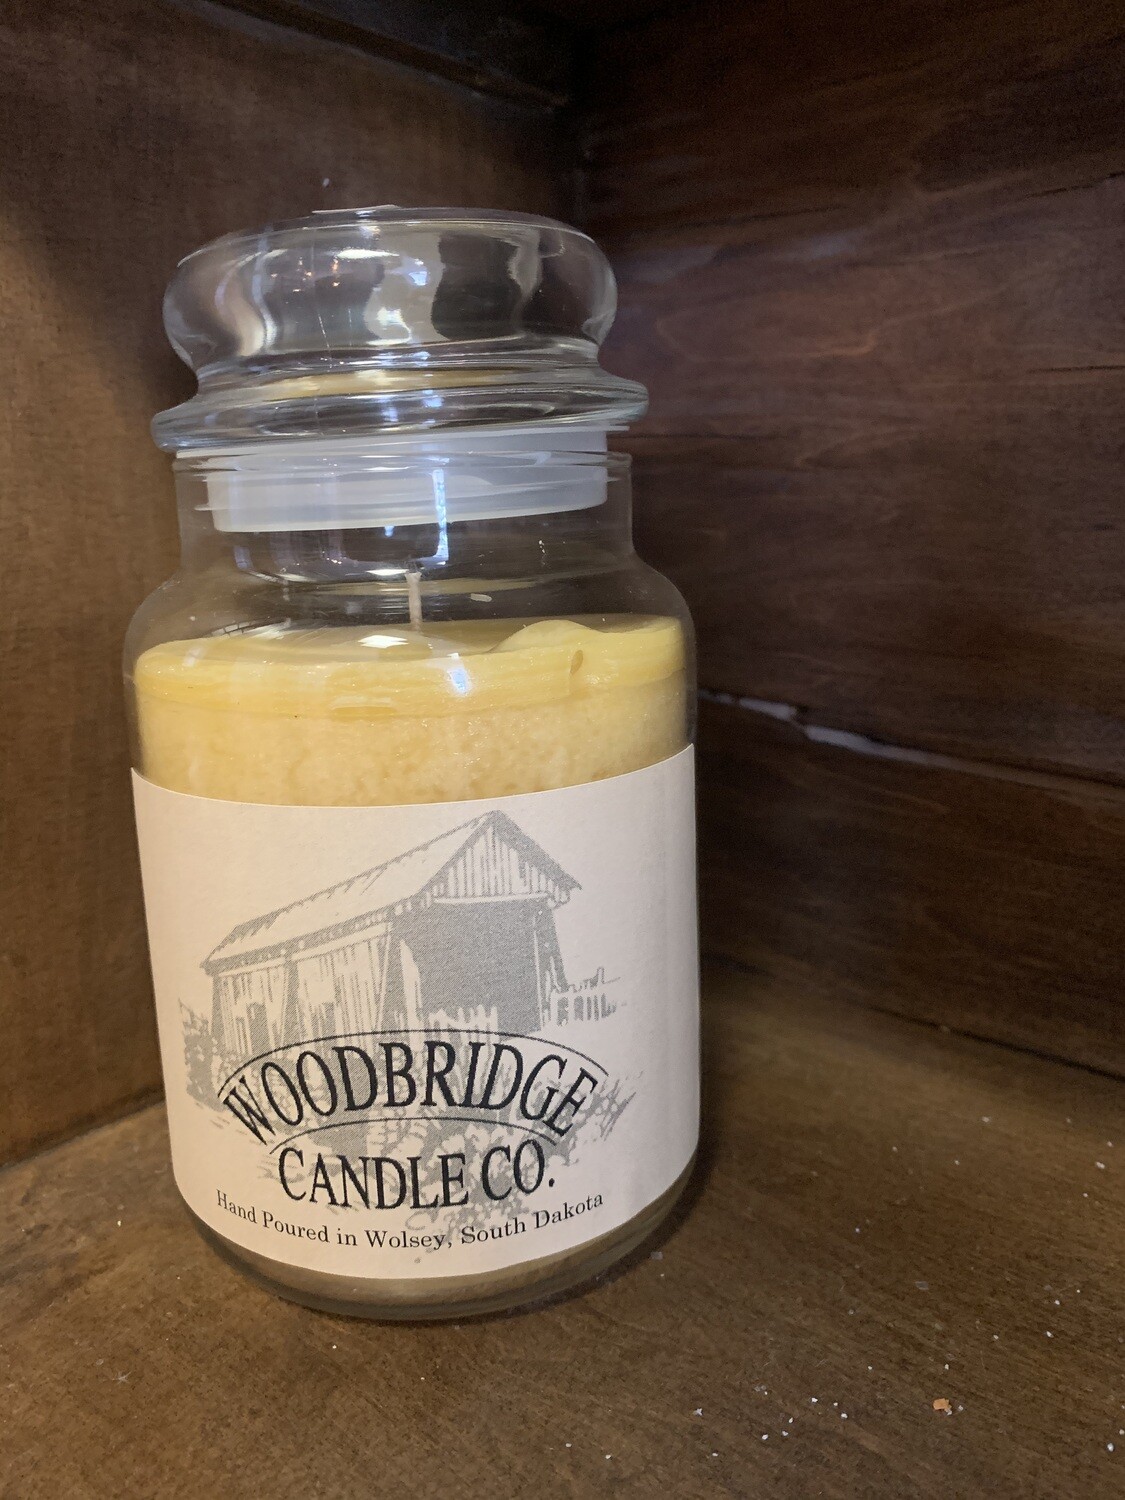 Woodbridge Candle Co - Sugar Cookie